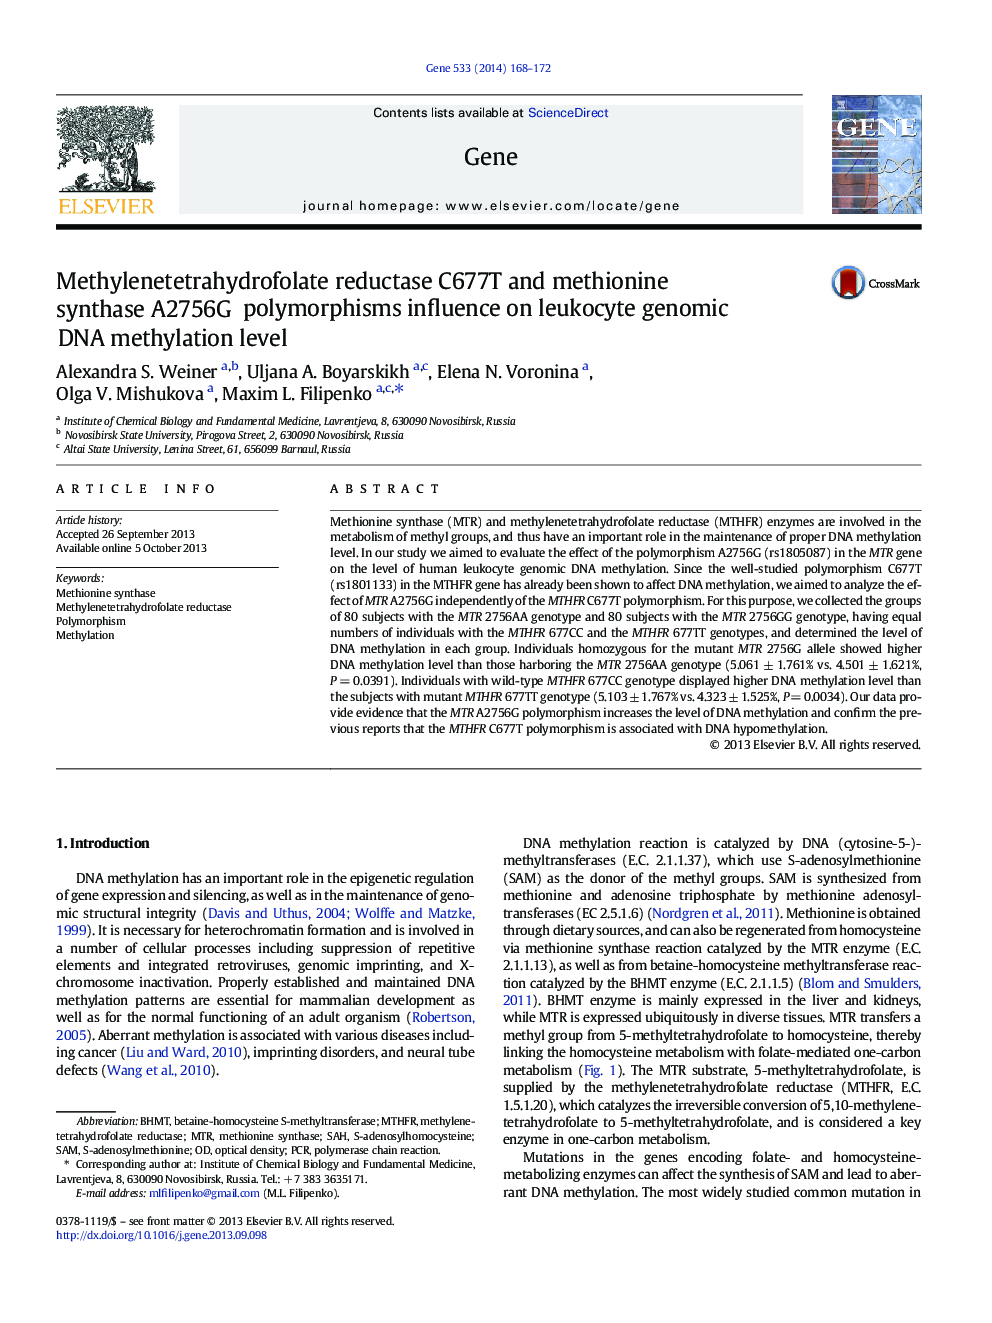 Methylenetetrahydrofolate reductase C677T and methionine synthase A2756G polymorphisms influence on leukocyte genomic DNA methylation level